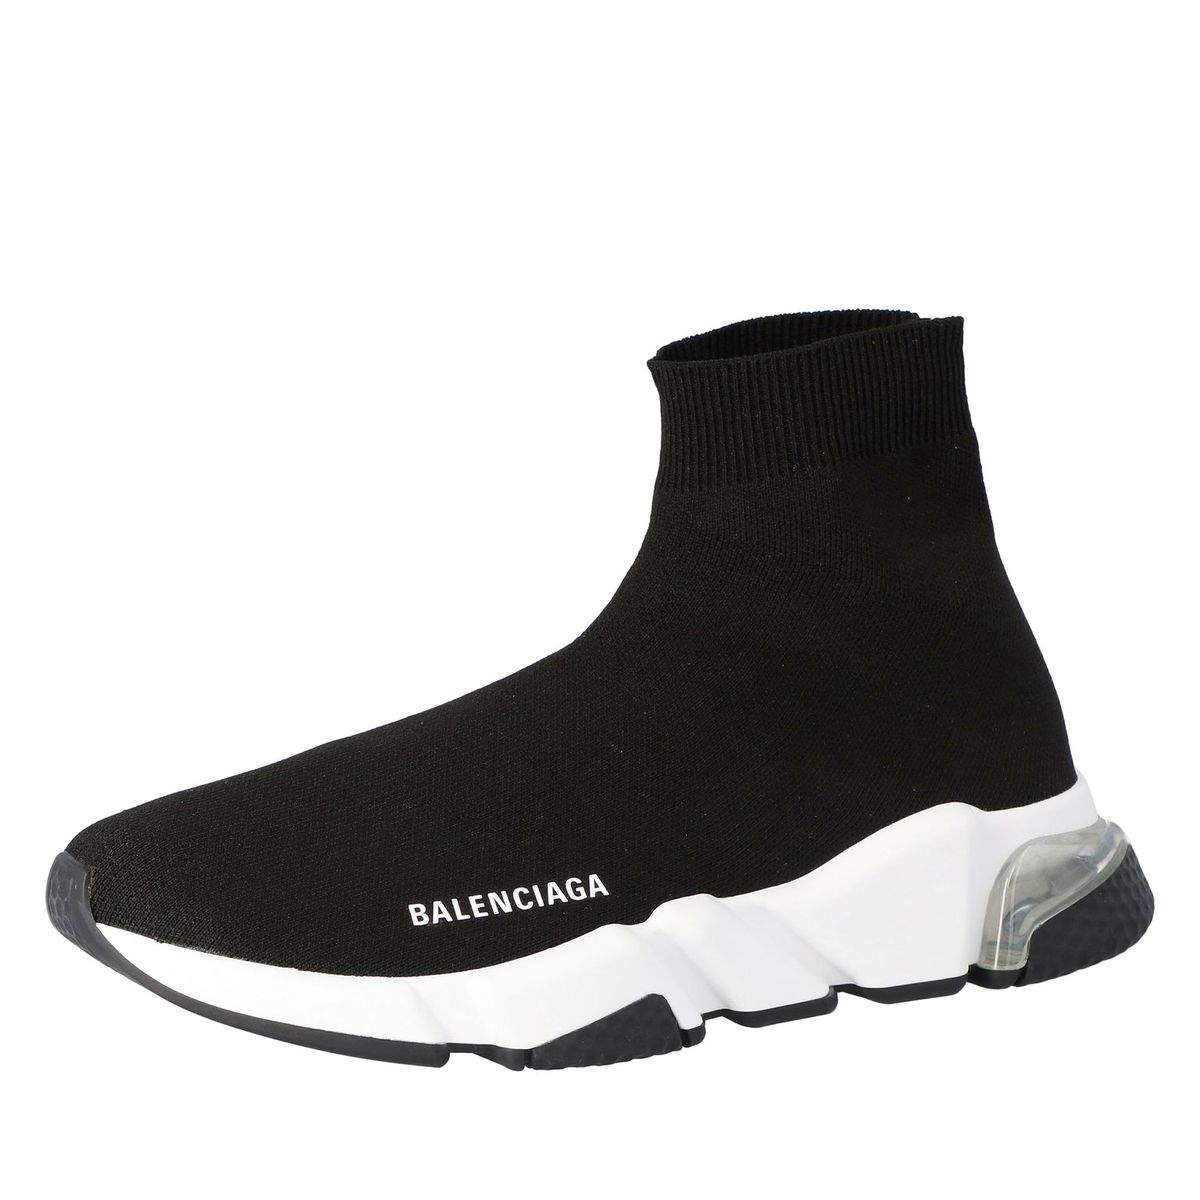 Balenciaga Black Knit Speed Clear Sole Sneakers Size 36 Balenciaga